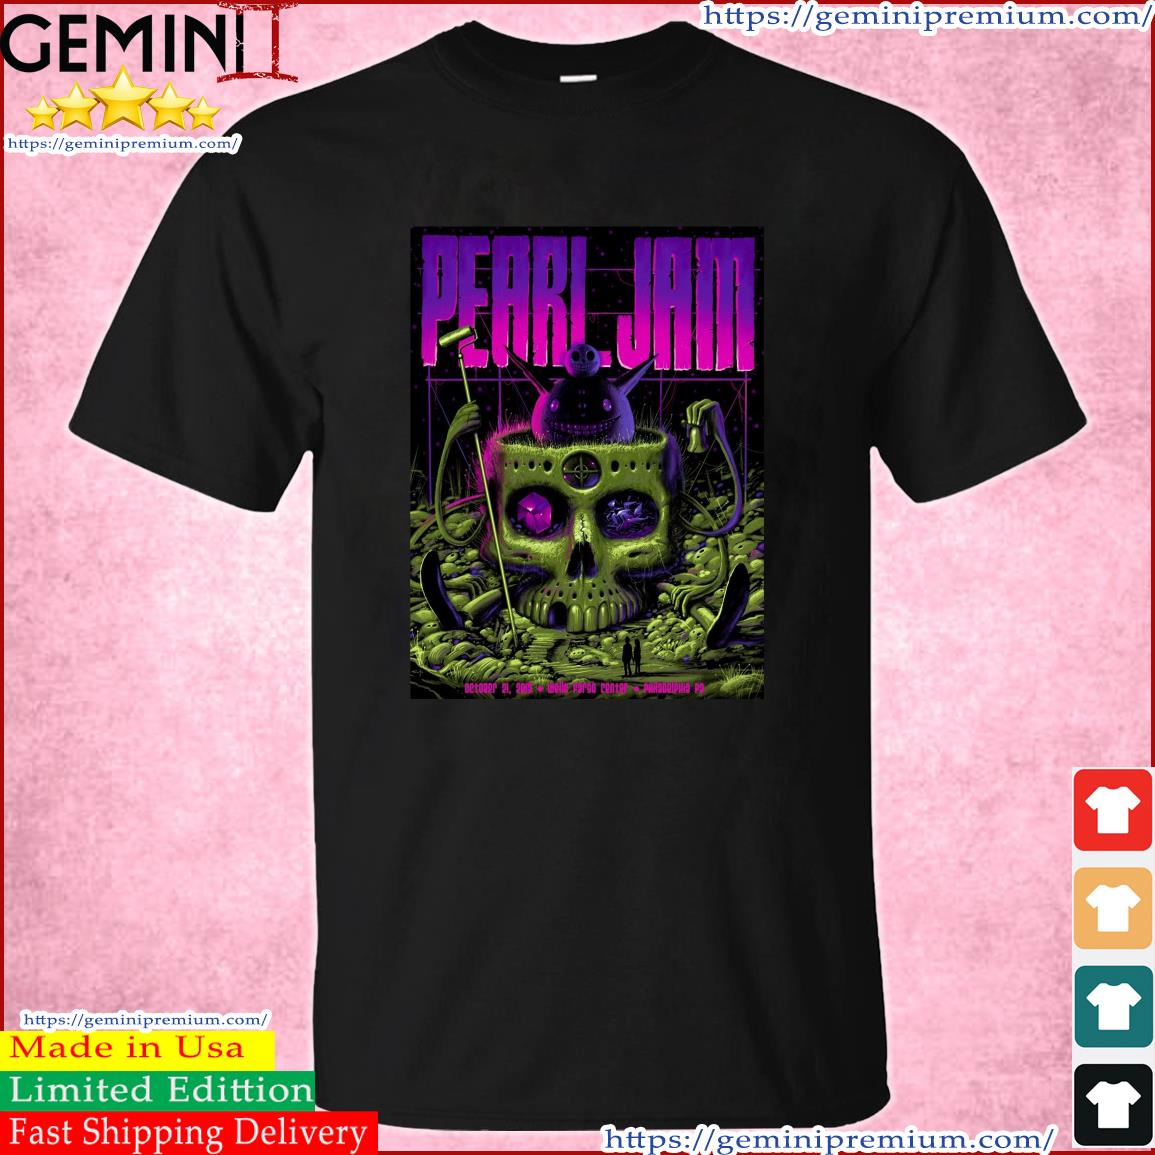 Pearl Jam October 21, 2013 – Wells Fargo Center, Philadelphia, PA, USA shirt